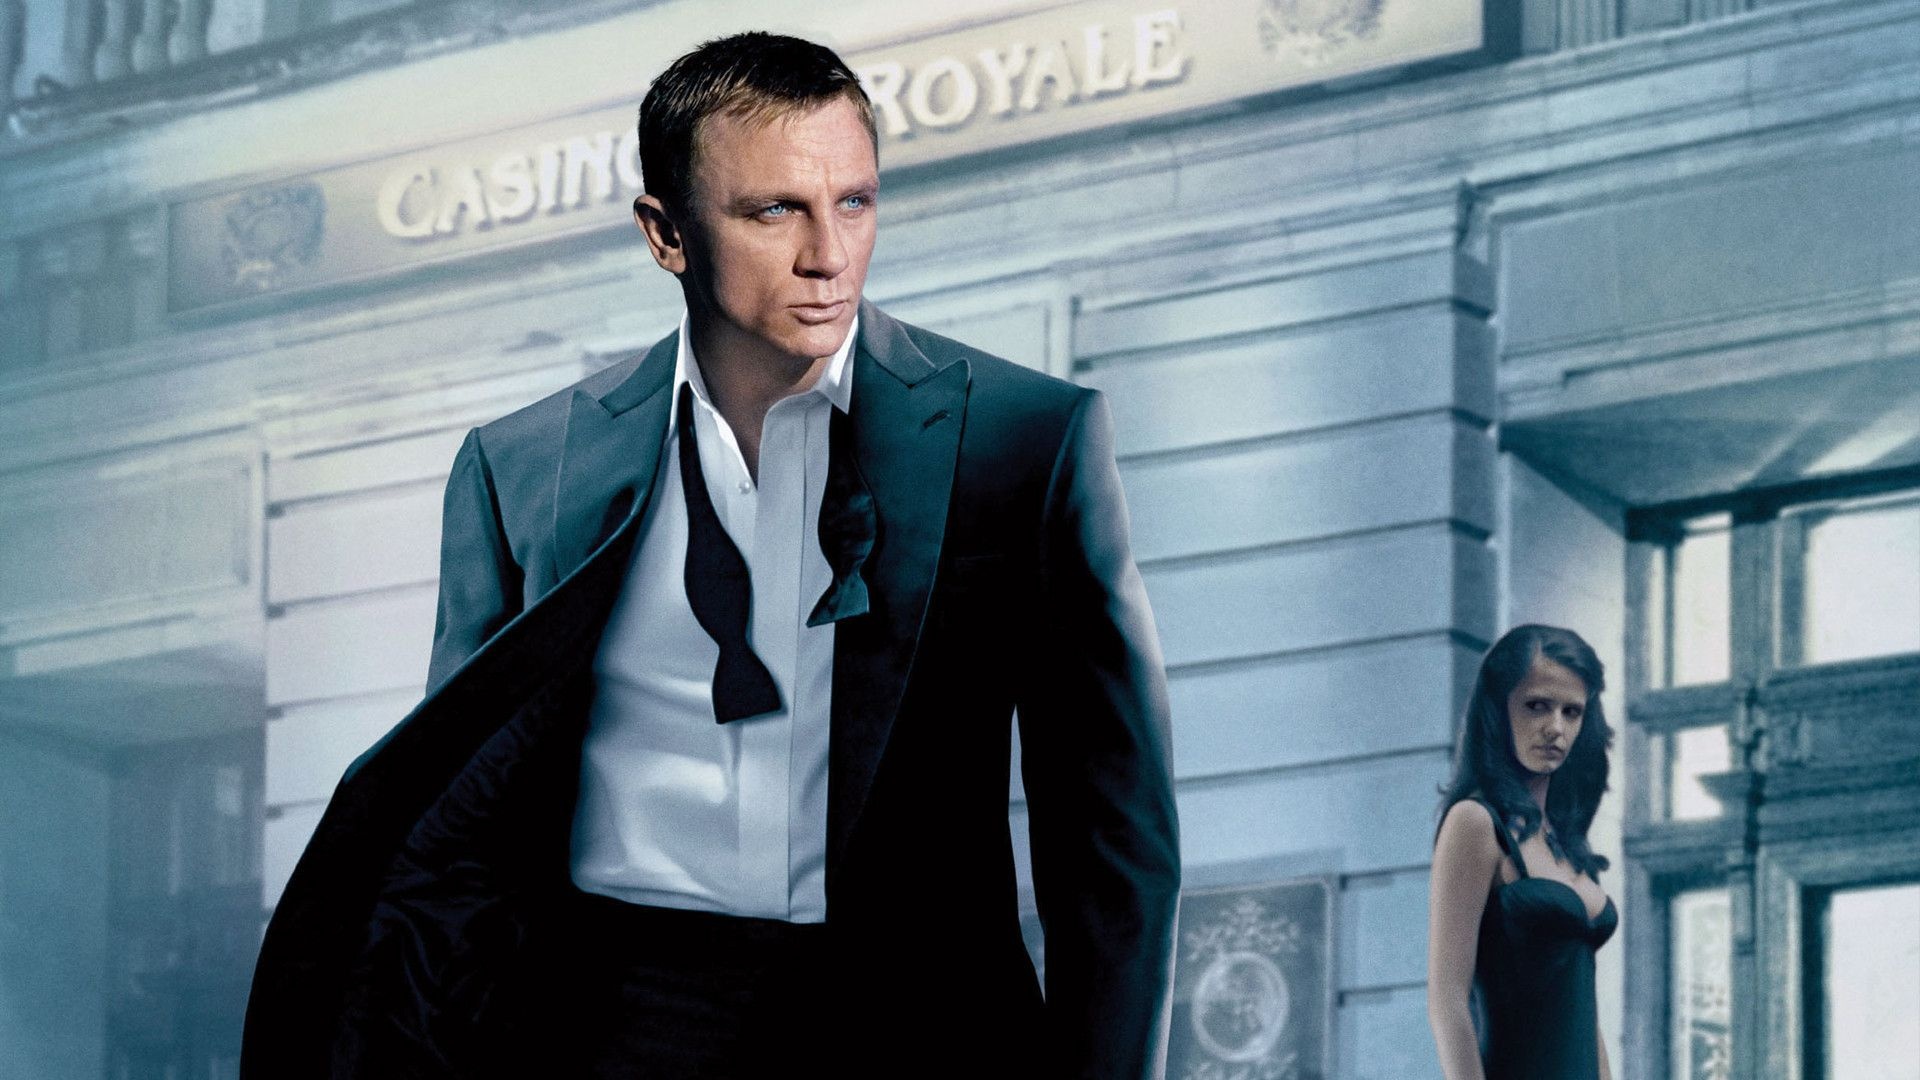 Casino Royale: In the film, Bond is on assignment to bankrupt terrorist financier Le Chiffre. 1920x1080 Full HD Wallpaper.